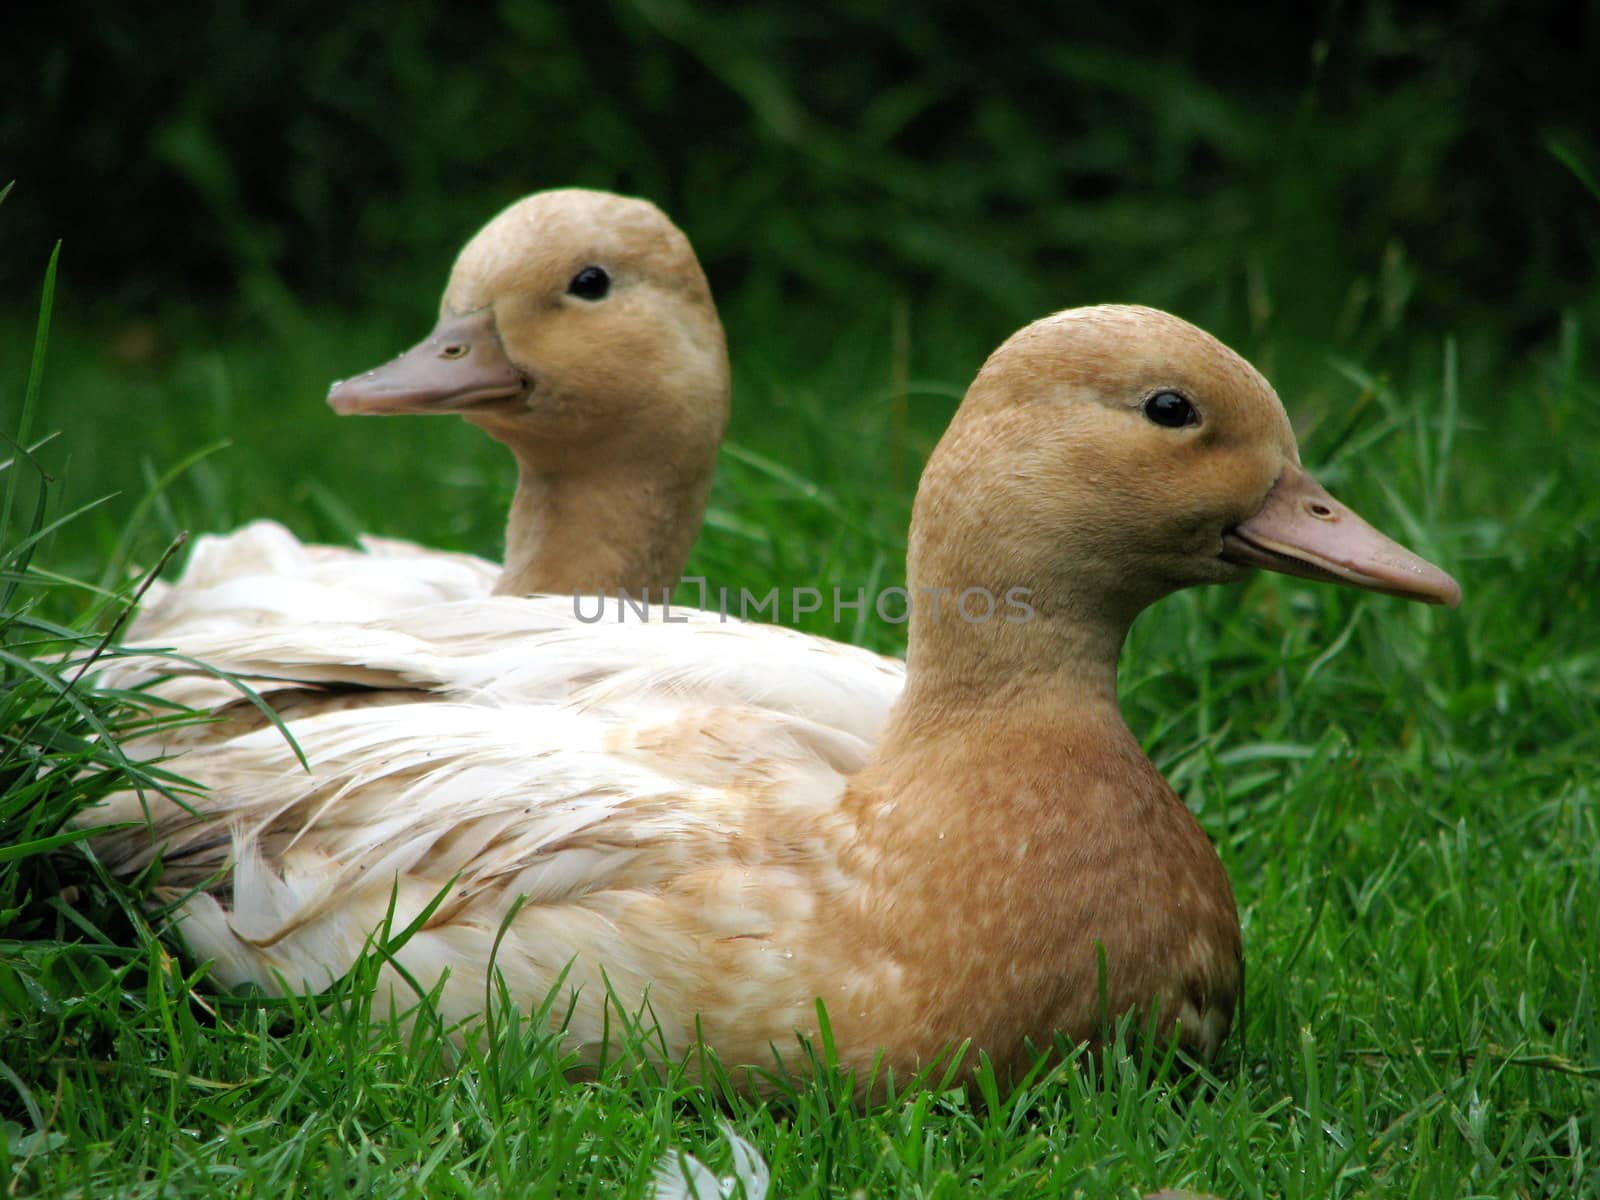 Two brown call ducks (bantam ducks) relaxing on the grass.